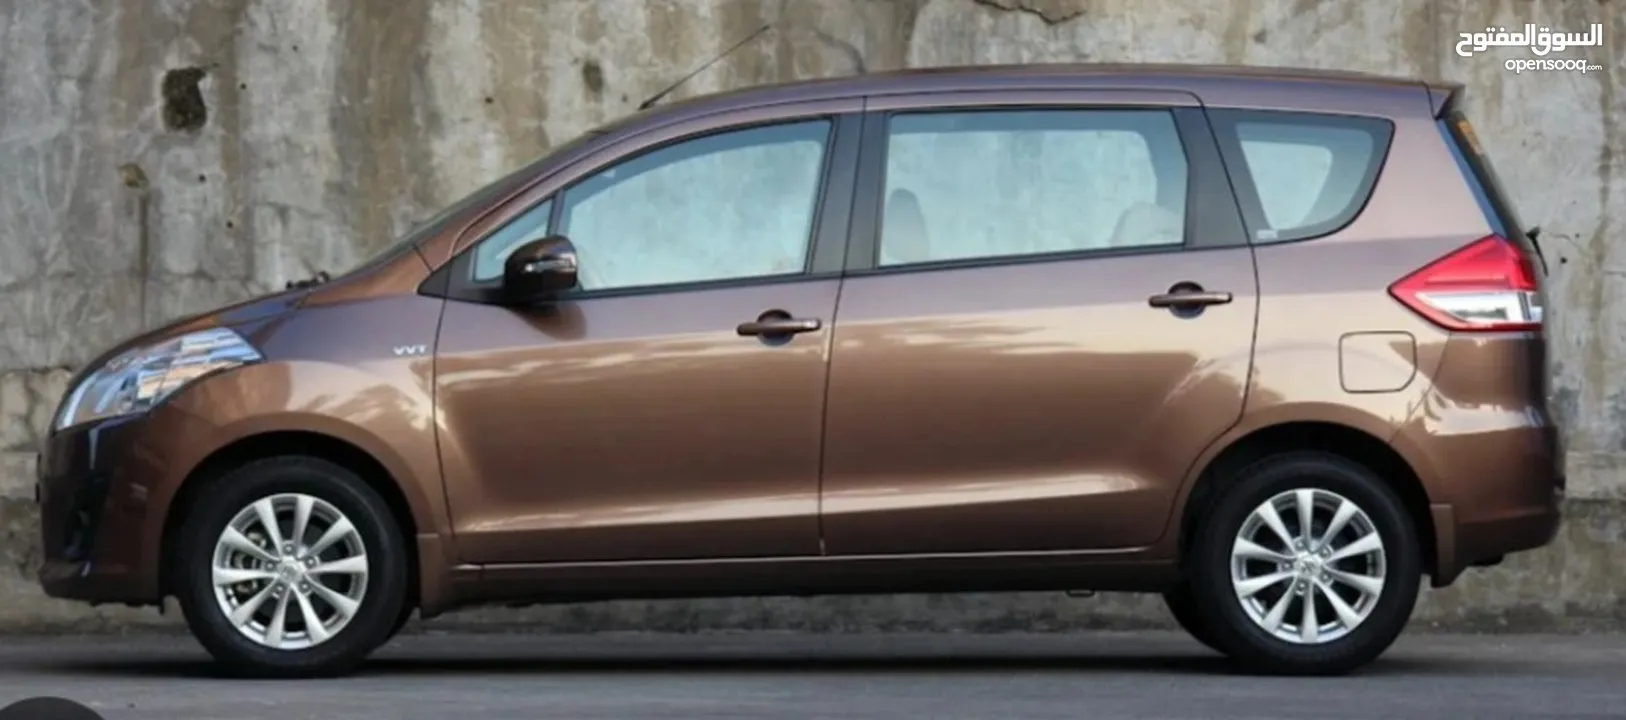 Suzuki ertiga brown 2015